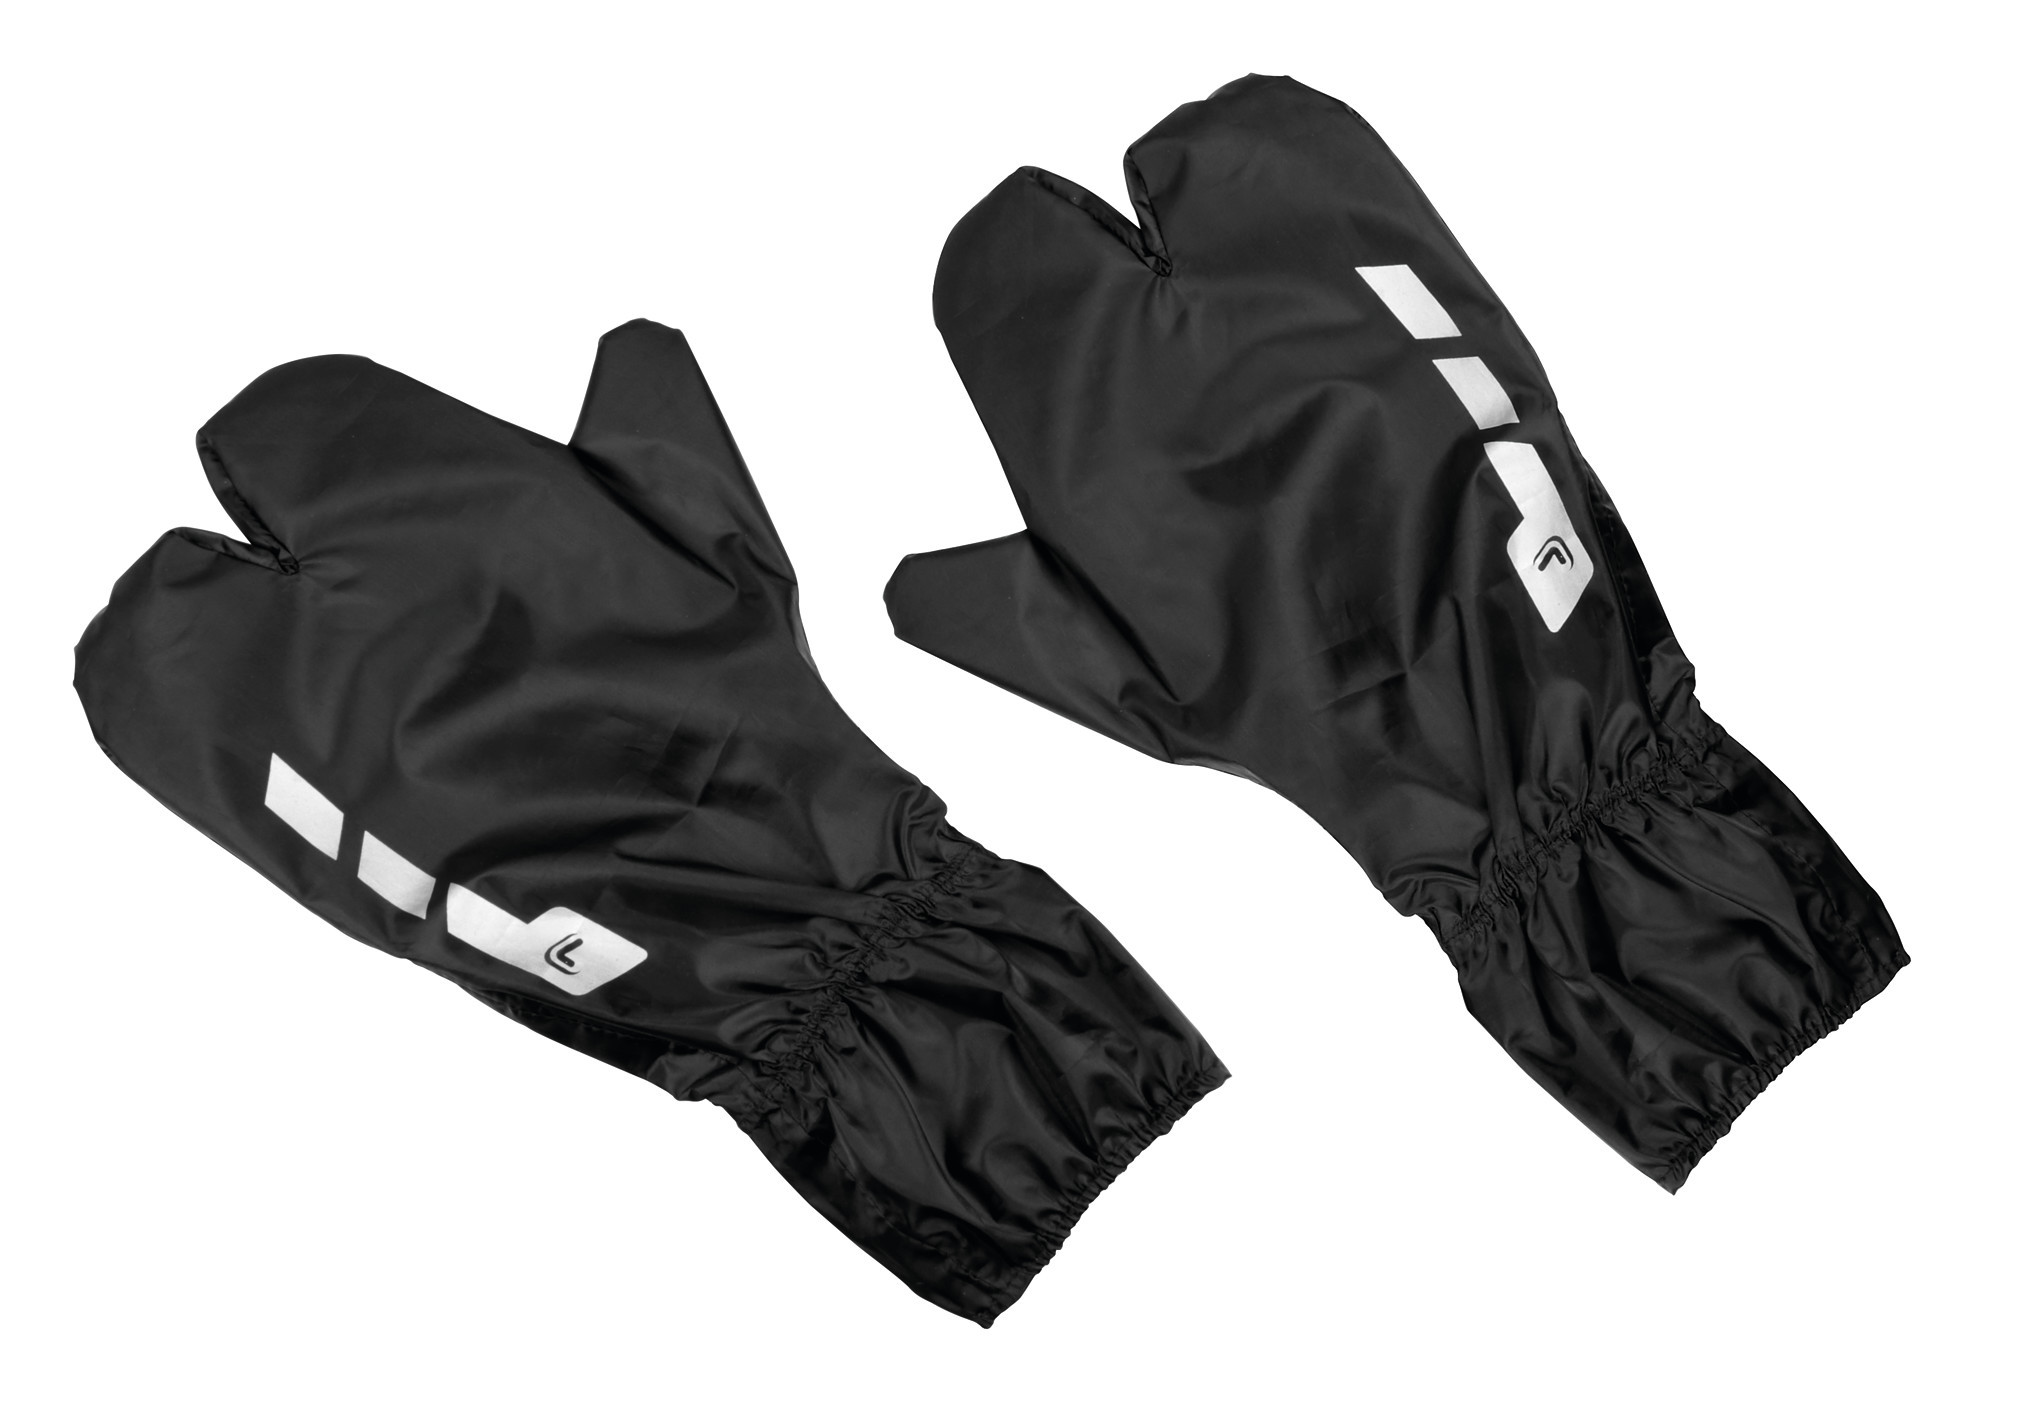 Rain-Days T4, waterproof glove-covers thumb